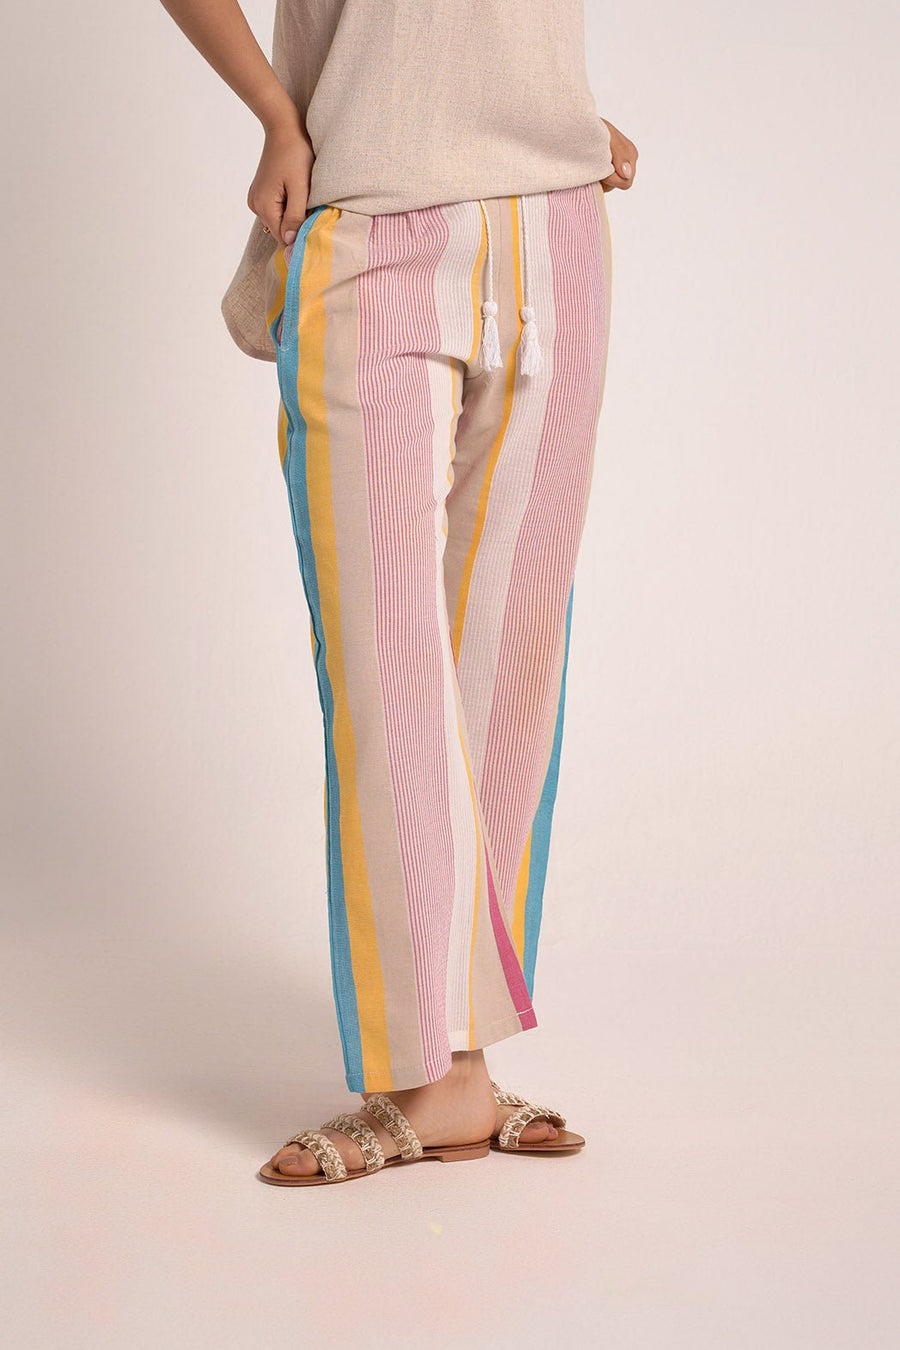 Pink & White stripes Linen Pants - nahlaelalfydesigns